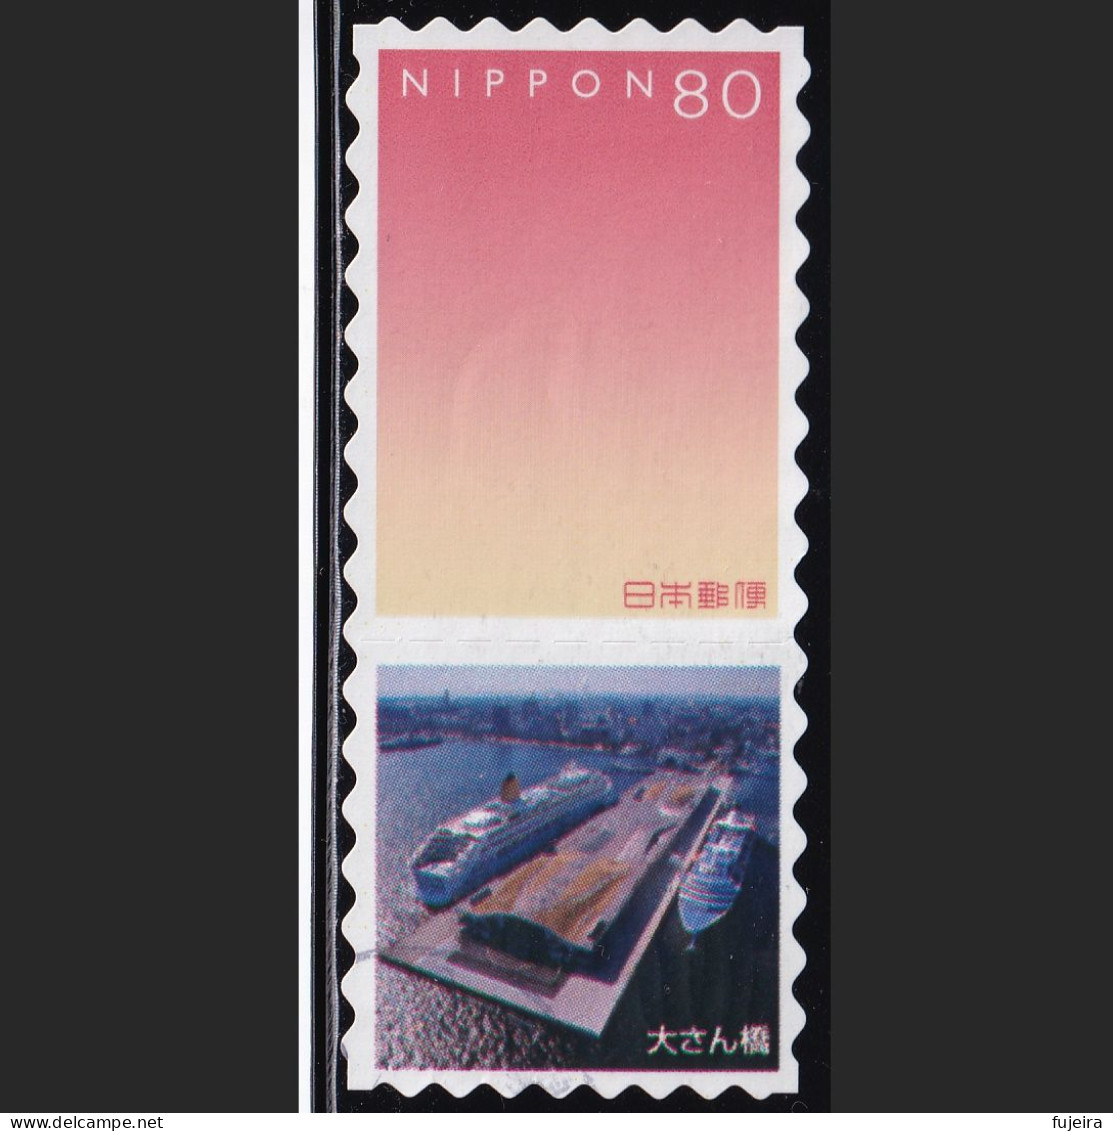 Japan Personalized Stamp, Osanbashi Bridge (jpv9597) Used - Oblitérés